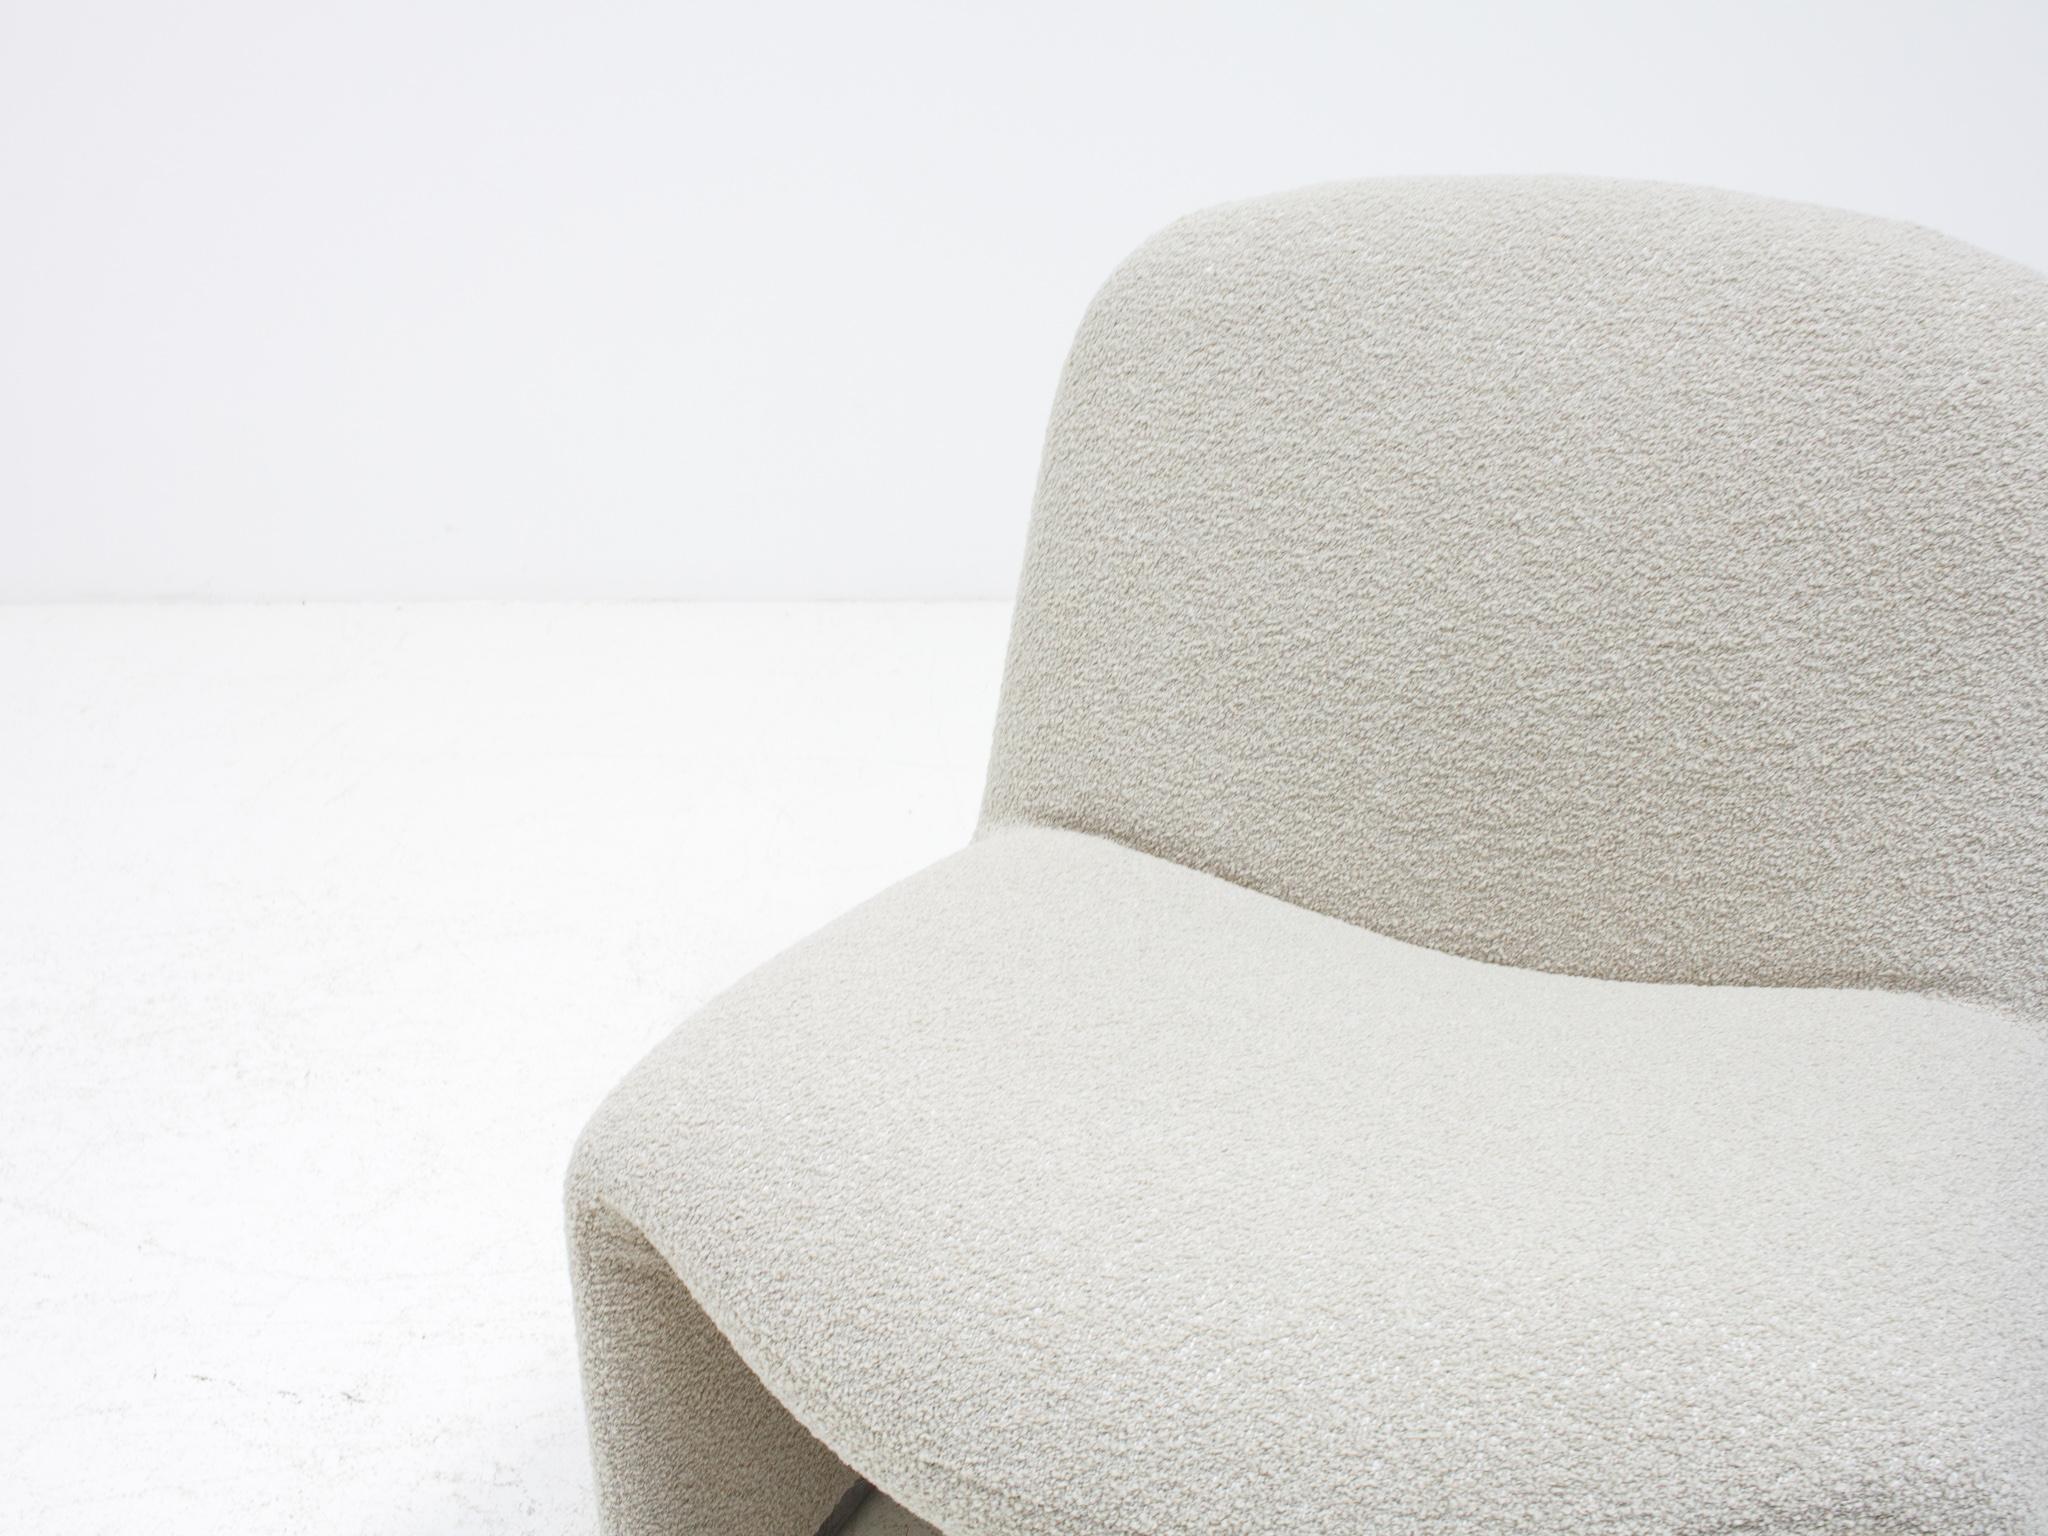 A Giancarlo Piretti “Alky” In A Yarn Collective Bouclé Fabric *Customizable* 1